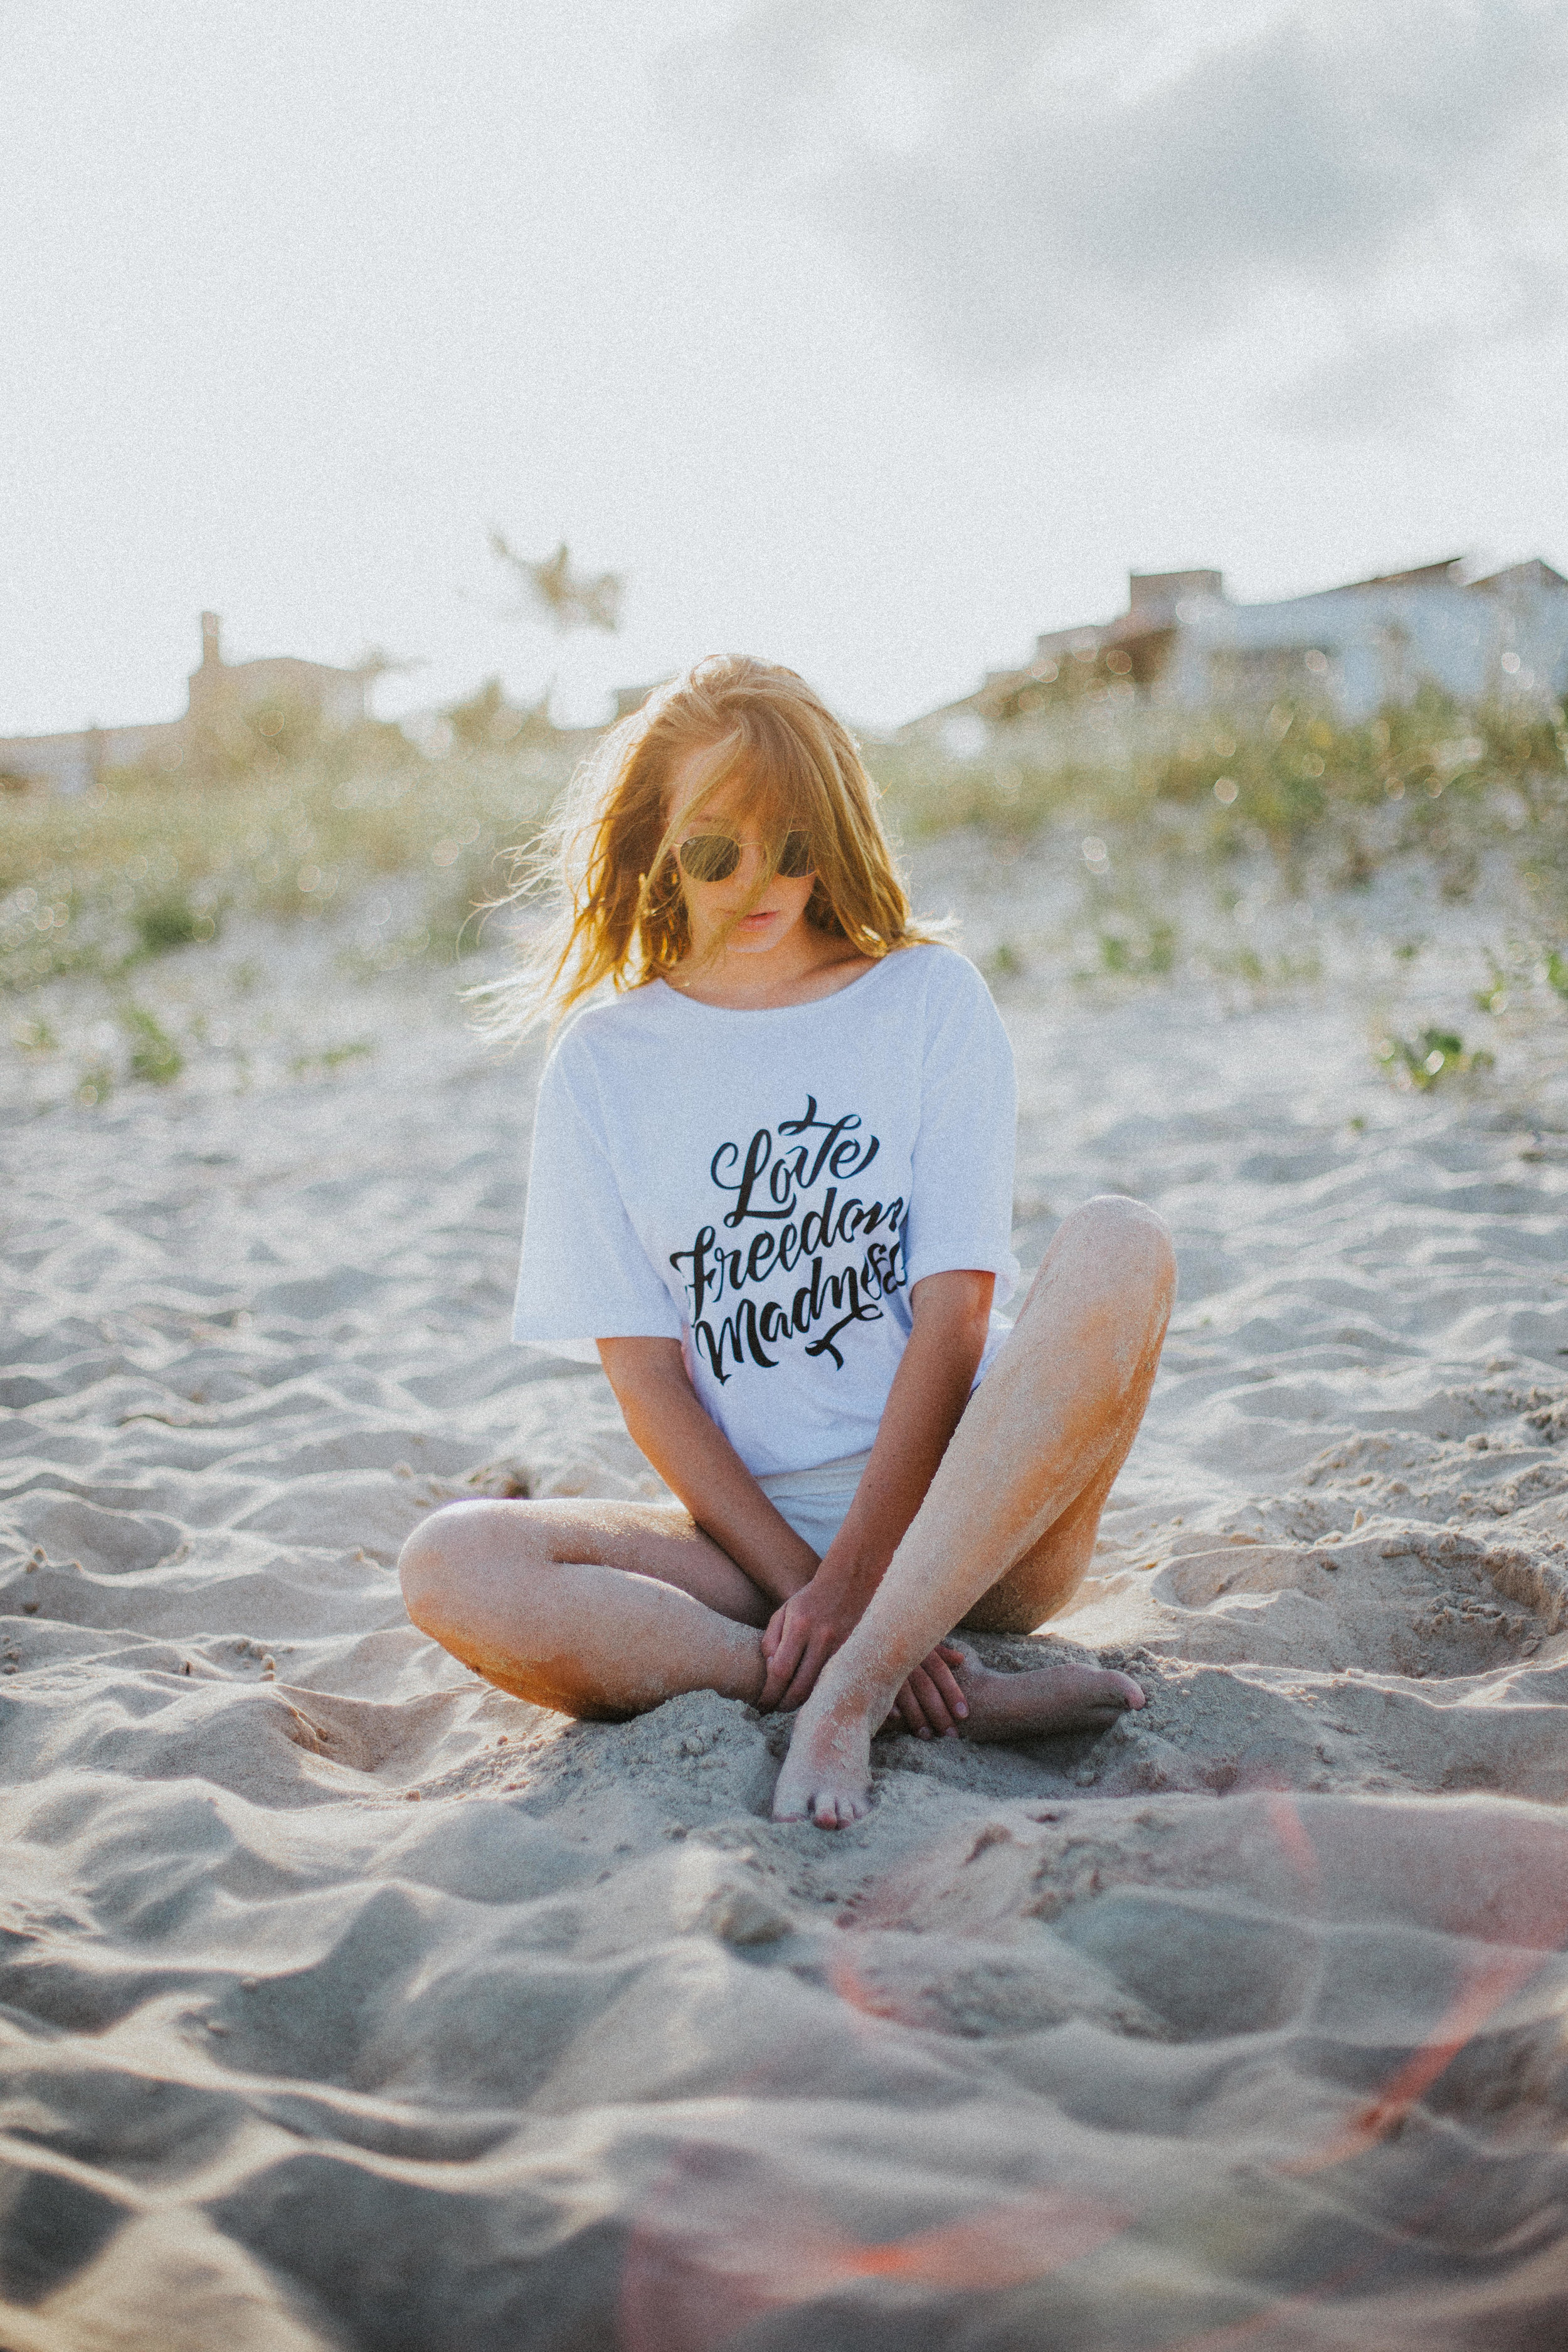 Gaby-Braun-Love-Freedom-Madness-Model-Brazil-t-shirt-beach-praia-ensaio-campanha-fotos-na-praia-ricardo-franzen-7.jpg